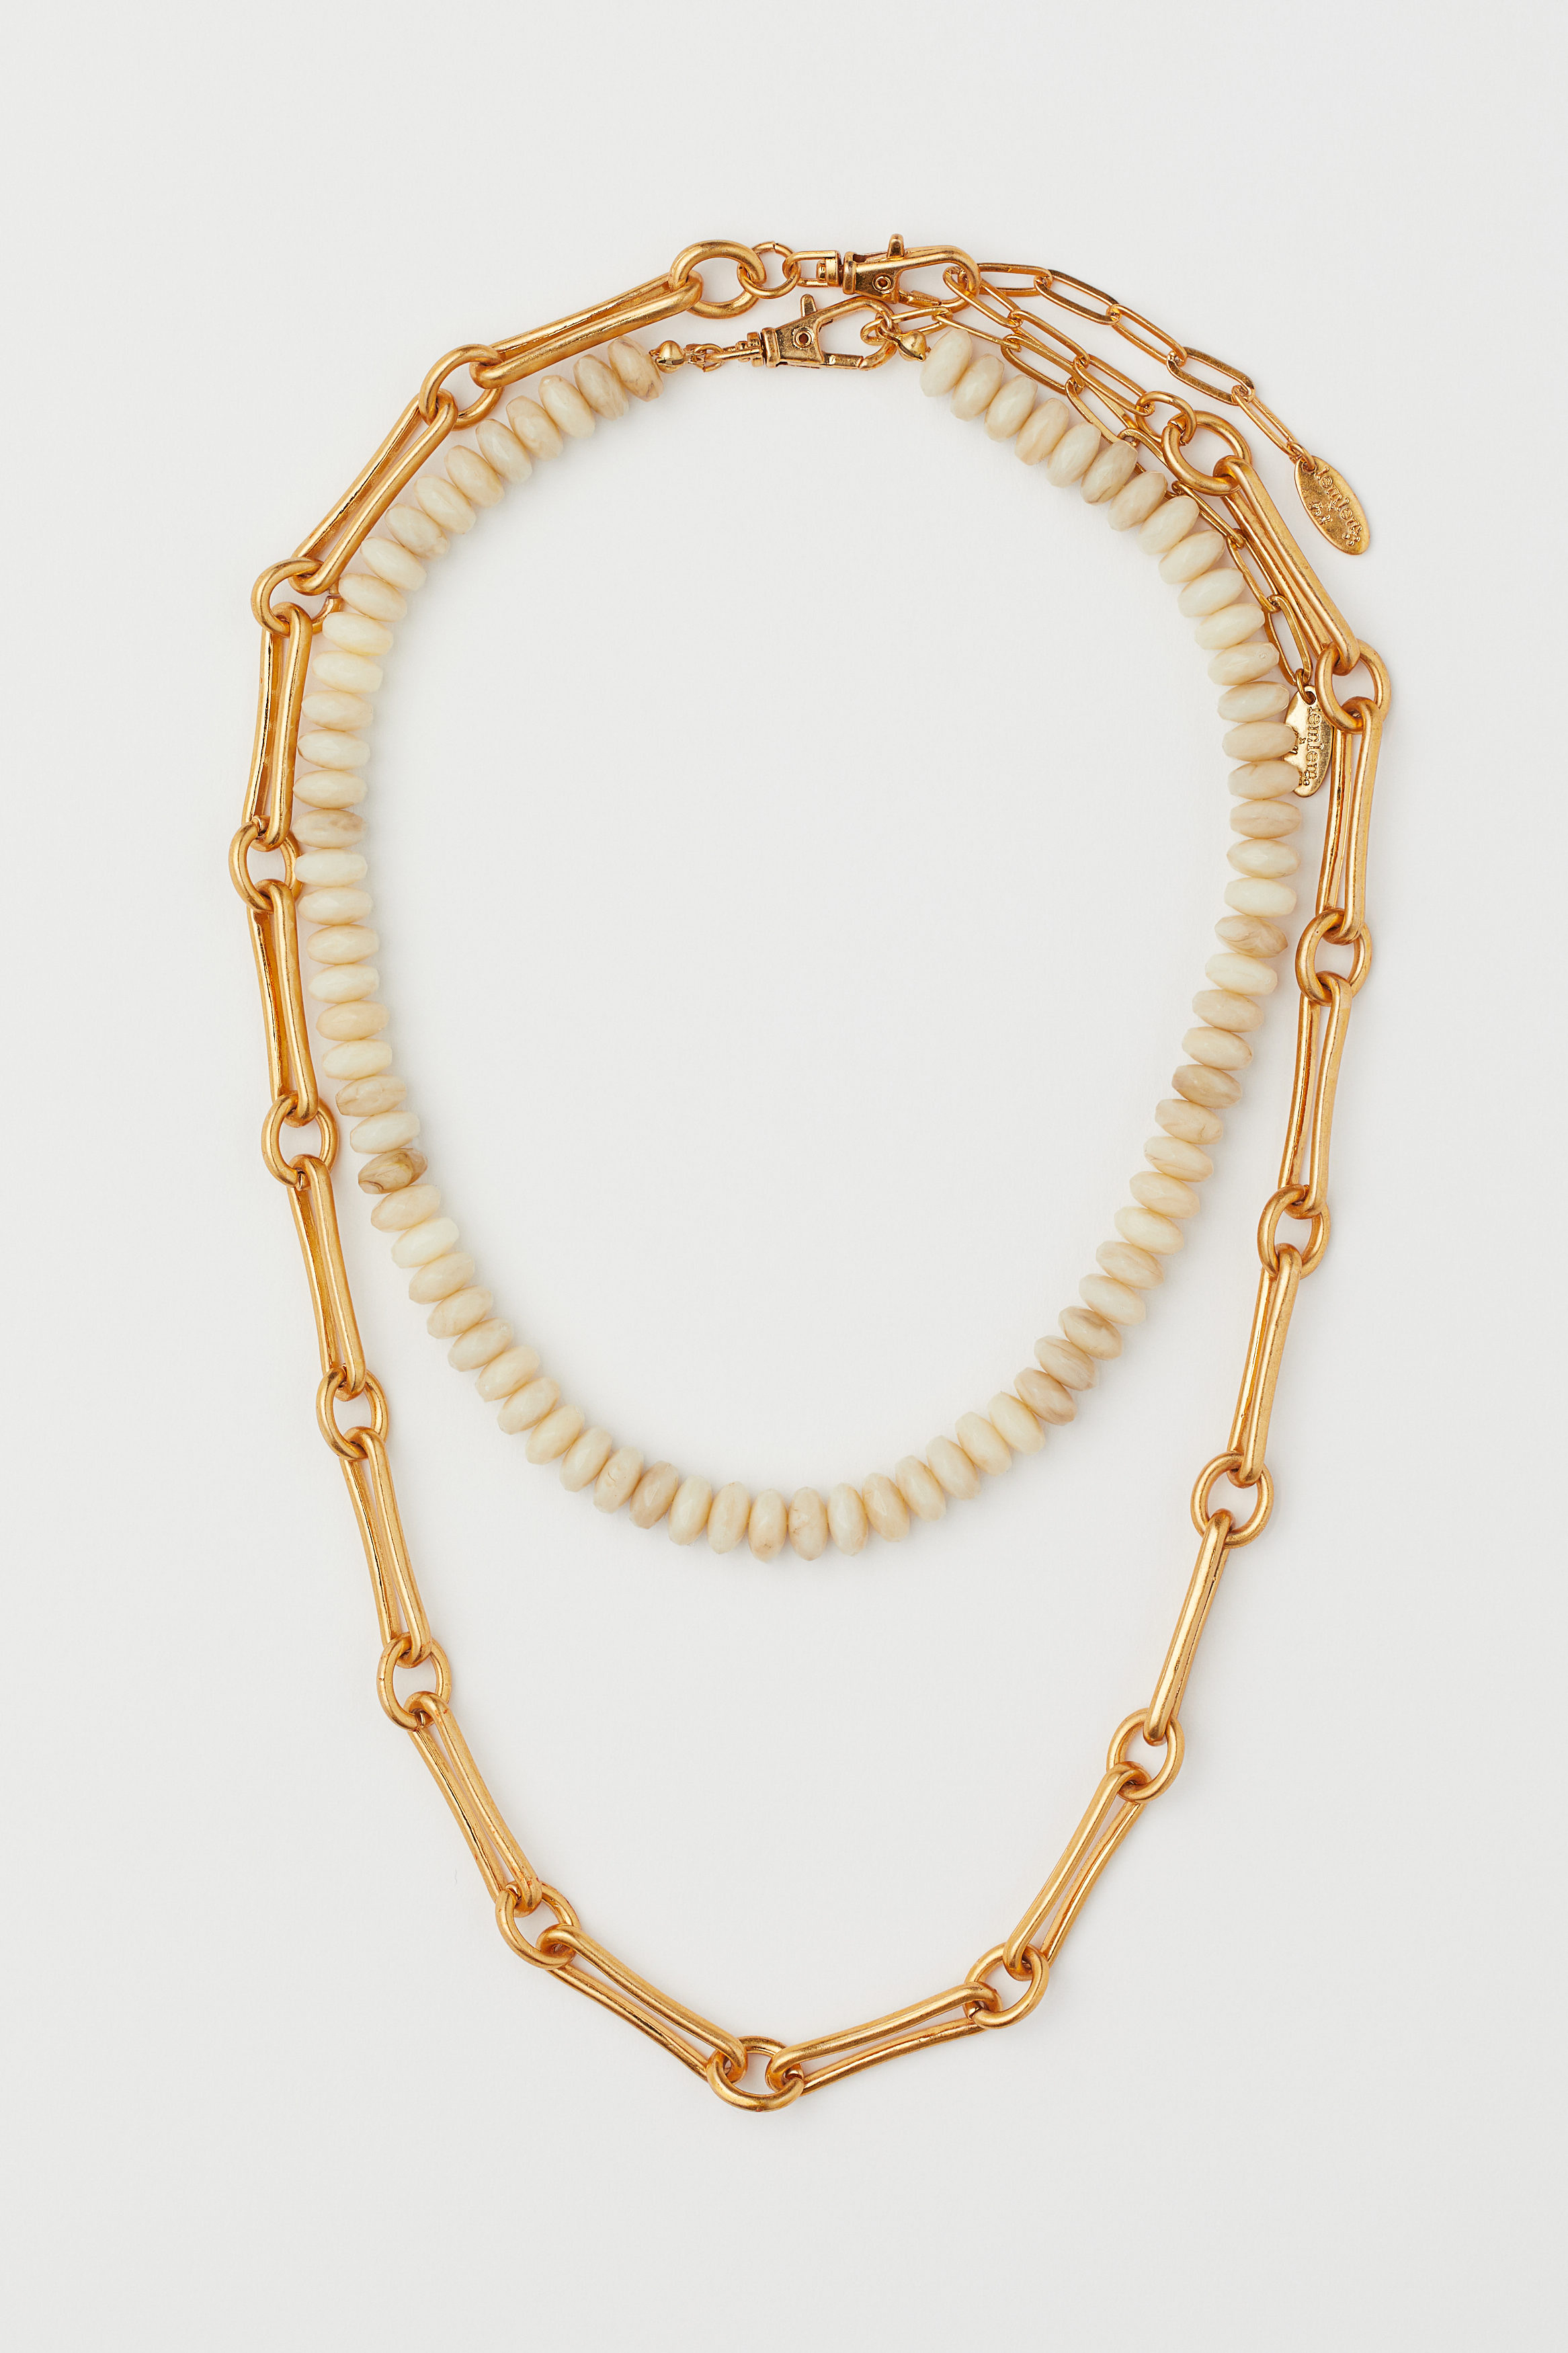 Frauen lange Perlenkette Halskette Sortiment 80cm sortierten bunten Schmuck Neu